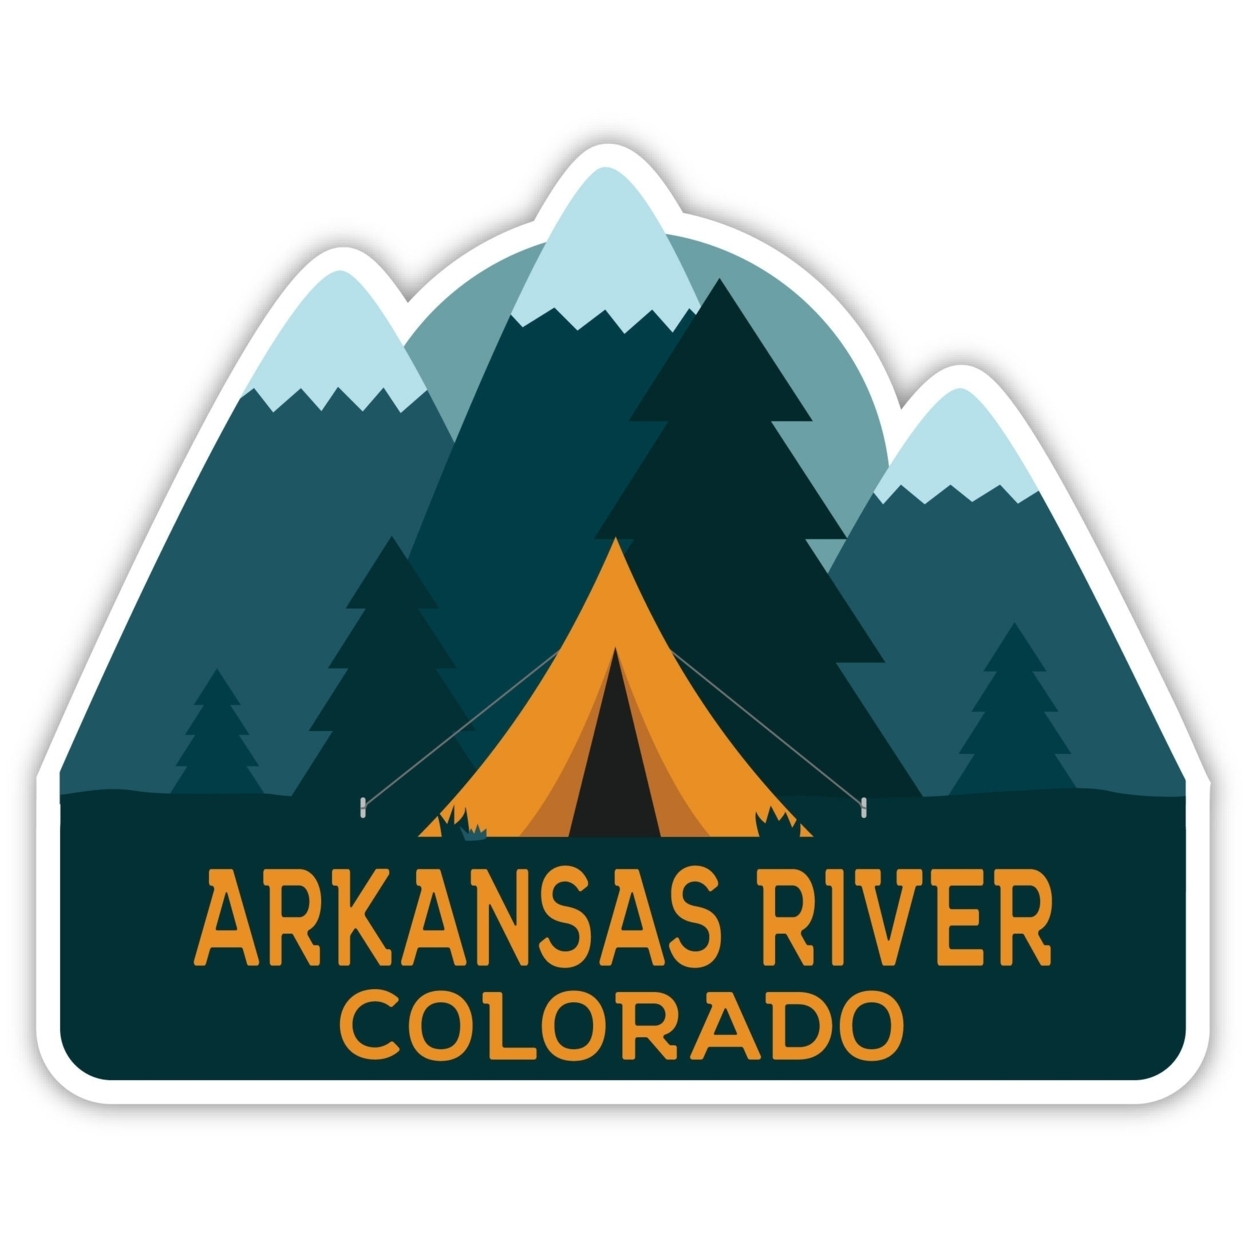 Arkansas River Colorado Souvenir Decorative Stickers (Choose Theme And Size) - Single Unit, 8-Inch, Tent